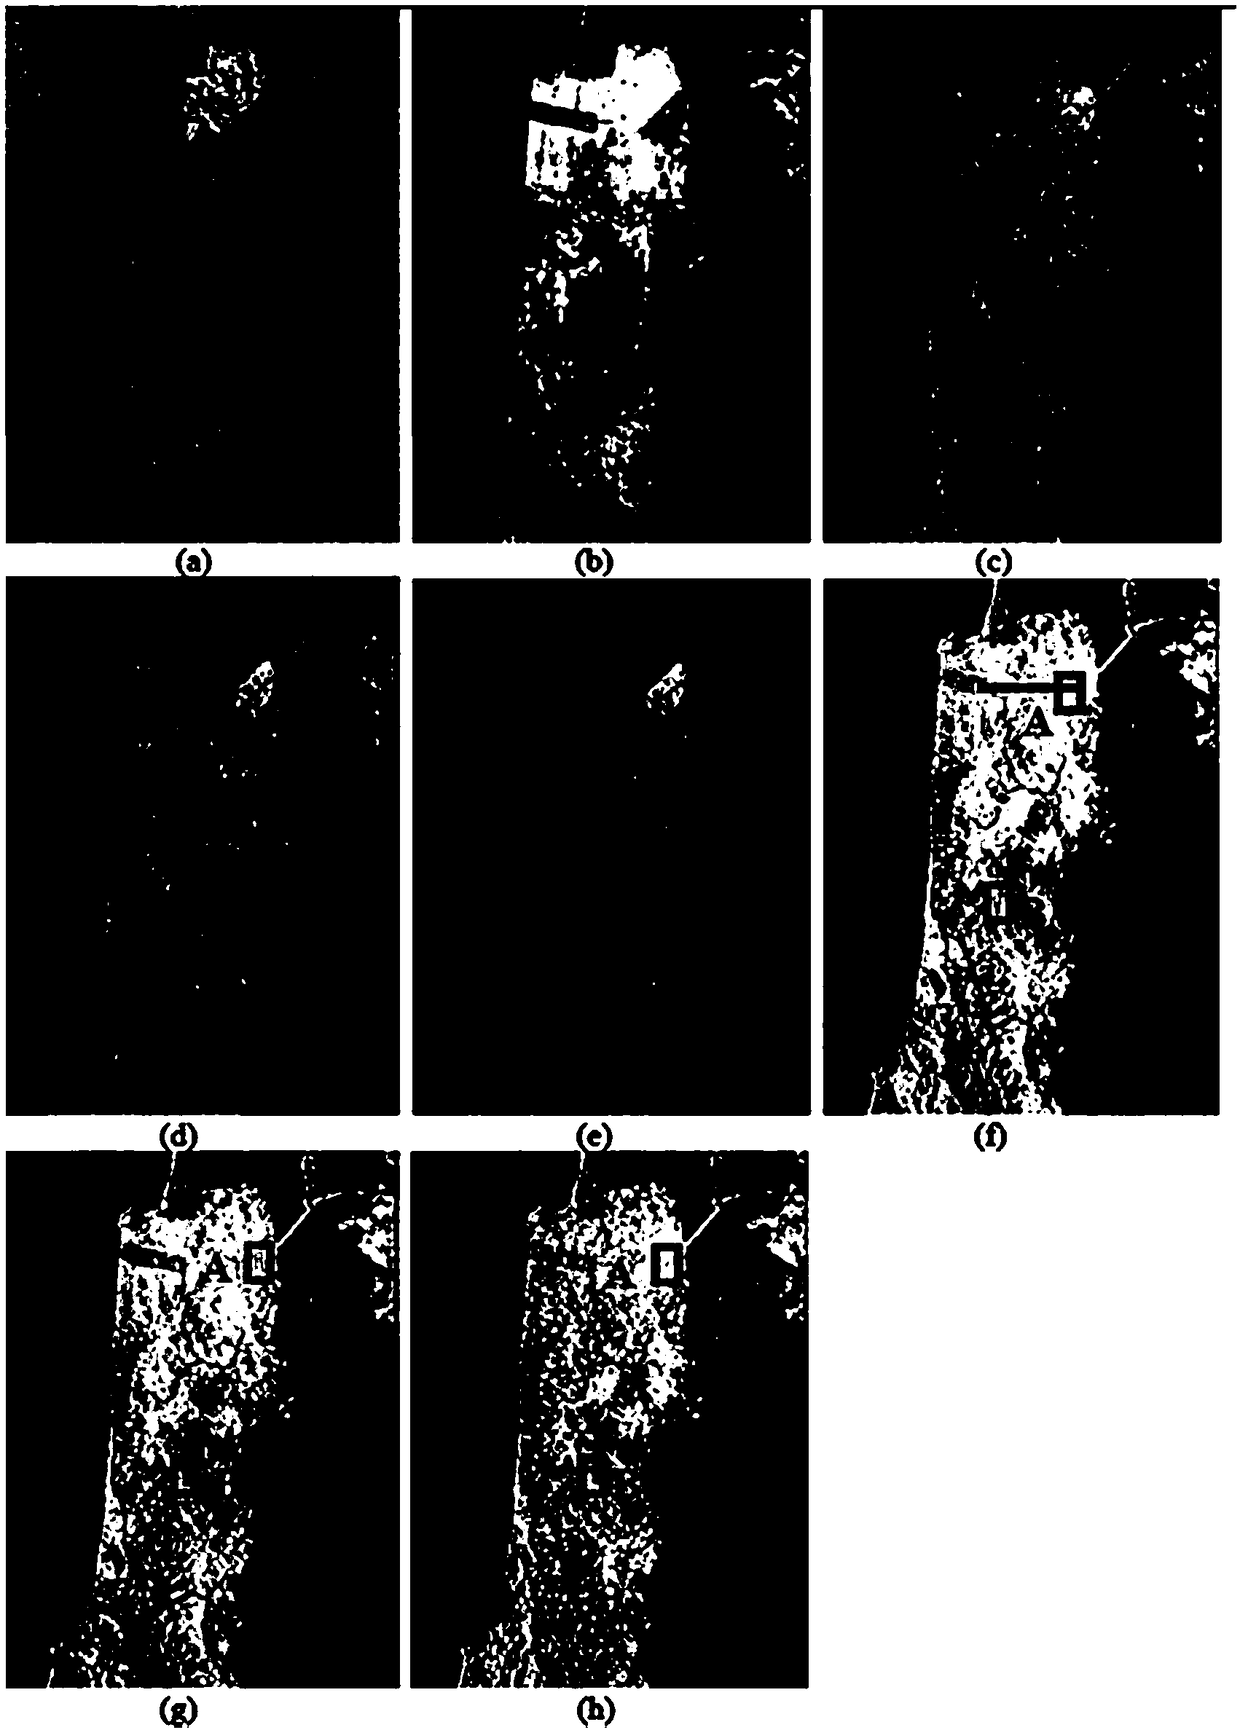 Cross-scattering model-based polarization radar remote sensing image urban target decomposition method